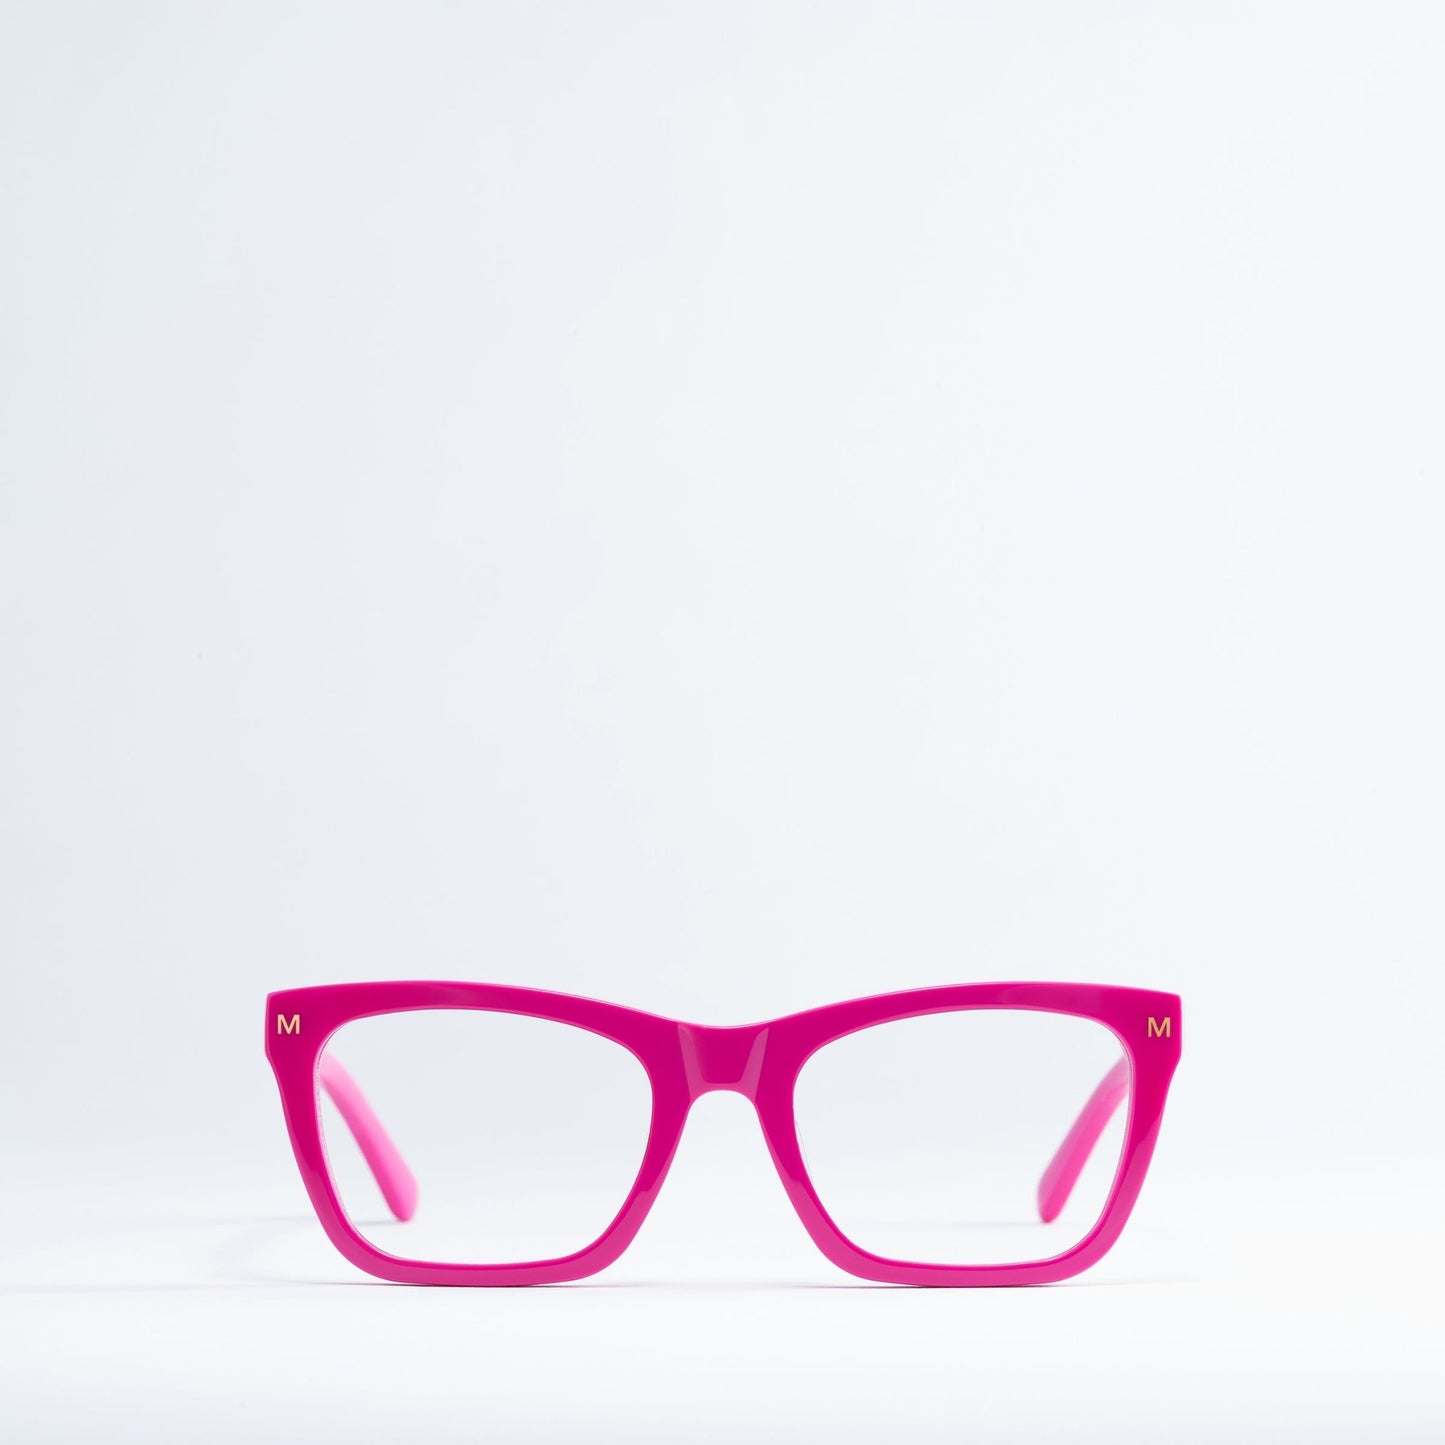 MACHETE Glasses in Neon Pink